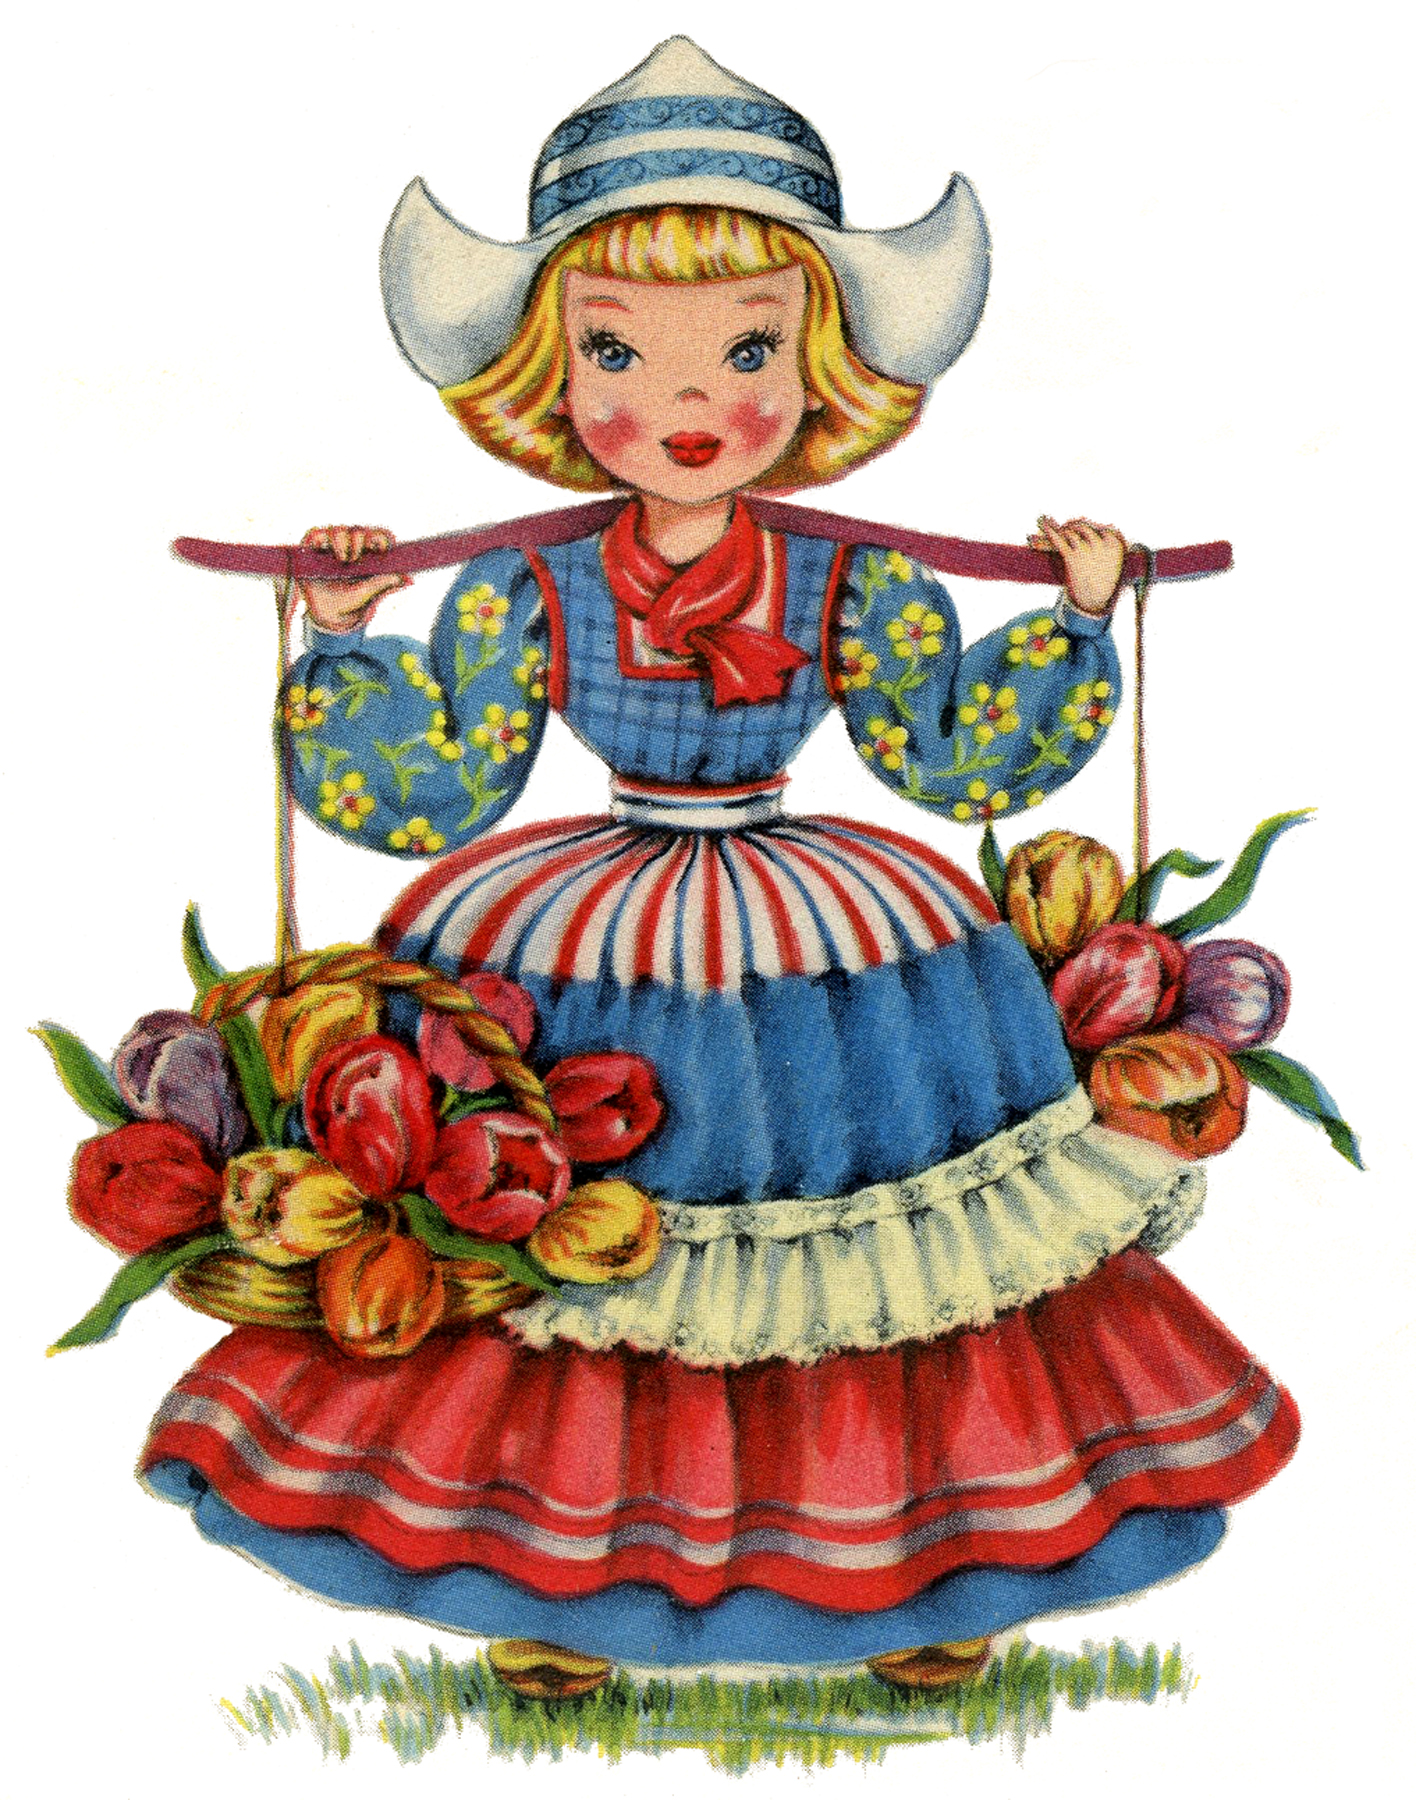 Cute Retro Dutch Doll Image! - The Graphics Fairy